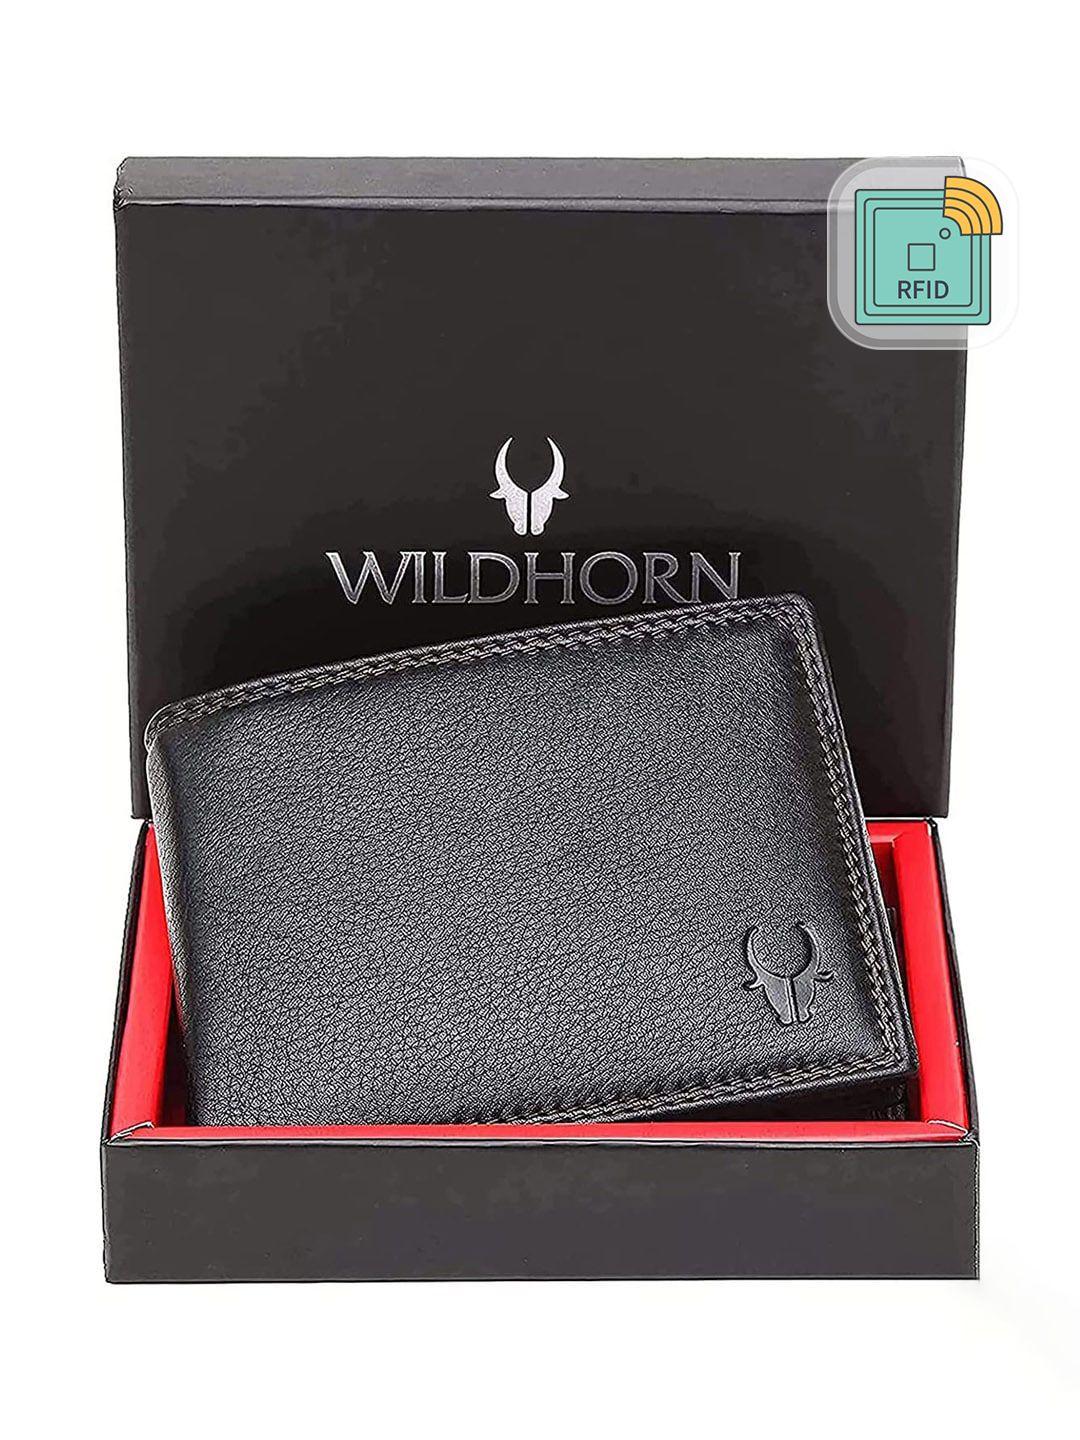 wildhorn men black solid rfid leather two fold wallet